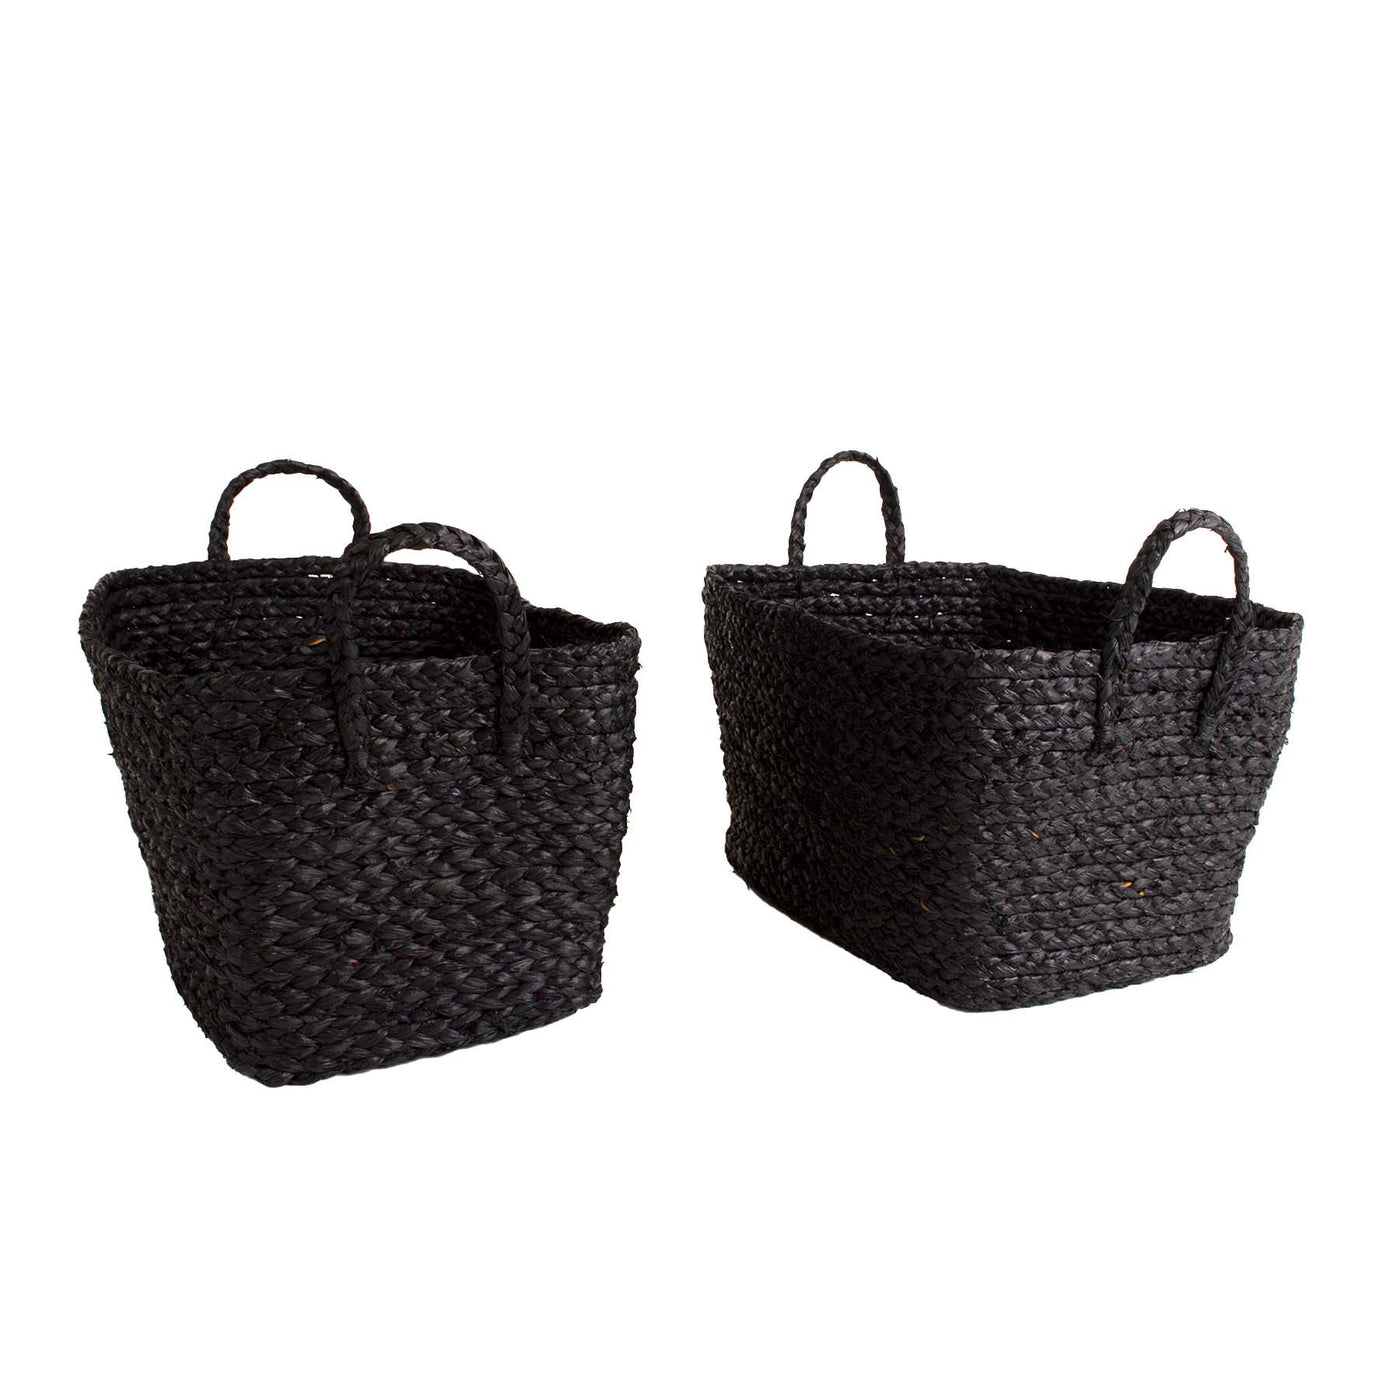 Storage Basket with Handles, Set of 2 - Black